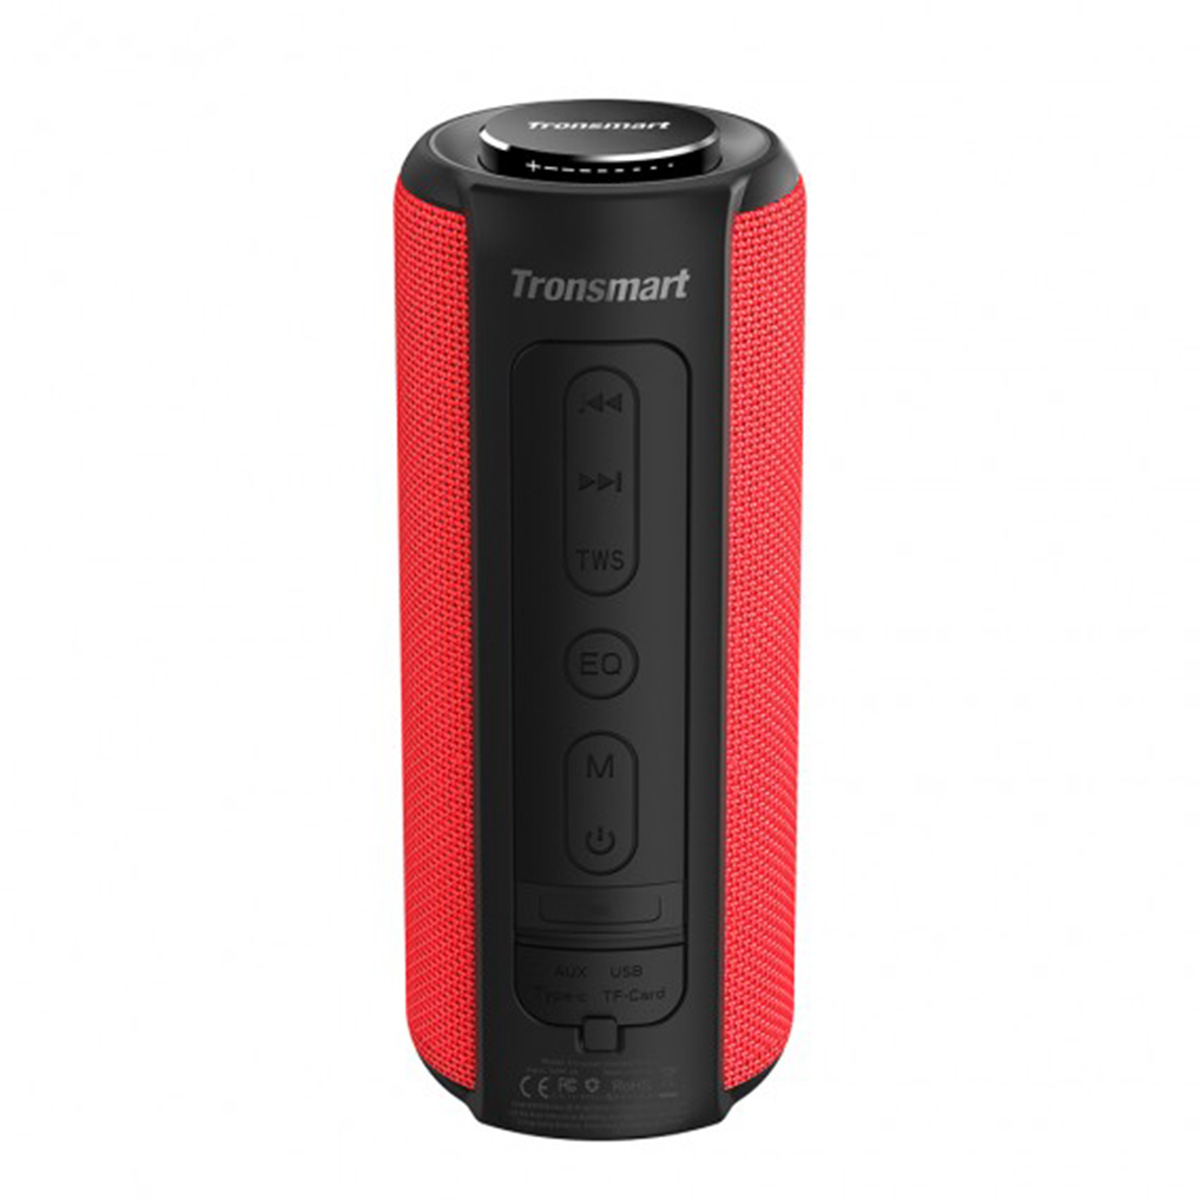 Tronsmart-Element-T6-Plus-Portable-40W-bluetooth-50-Speaker-Tri-Bass-IPX6-Waterproof-TWS-Stereo-Soun-1498184